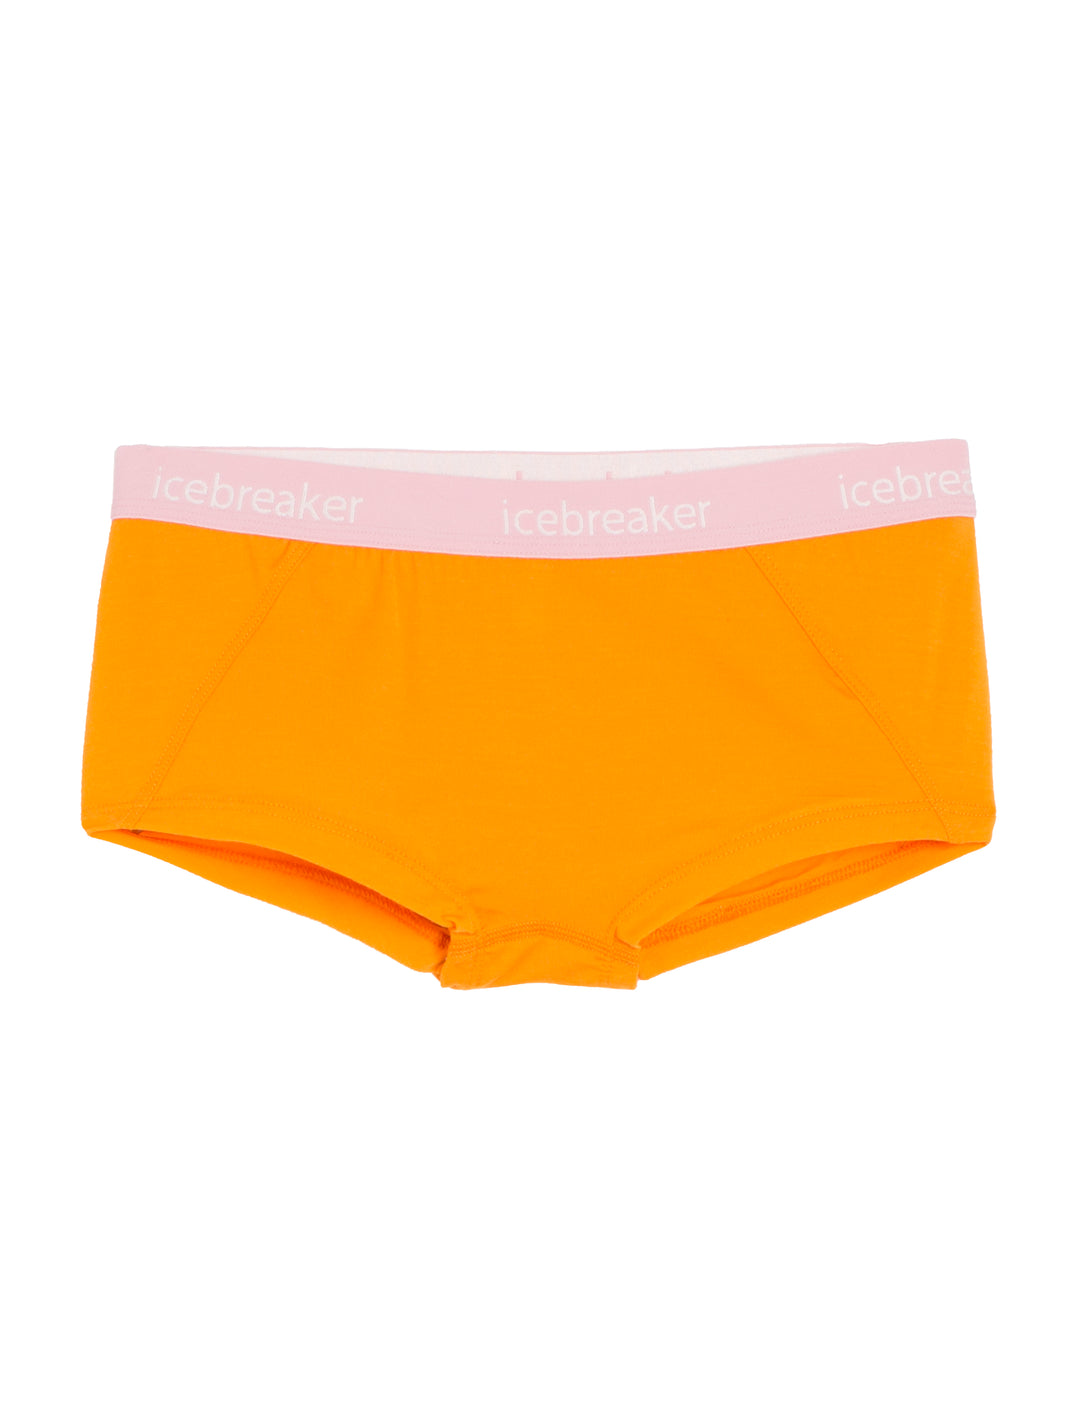 icebreaker Merino Undergarment Women's Sprite Hot Pants